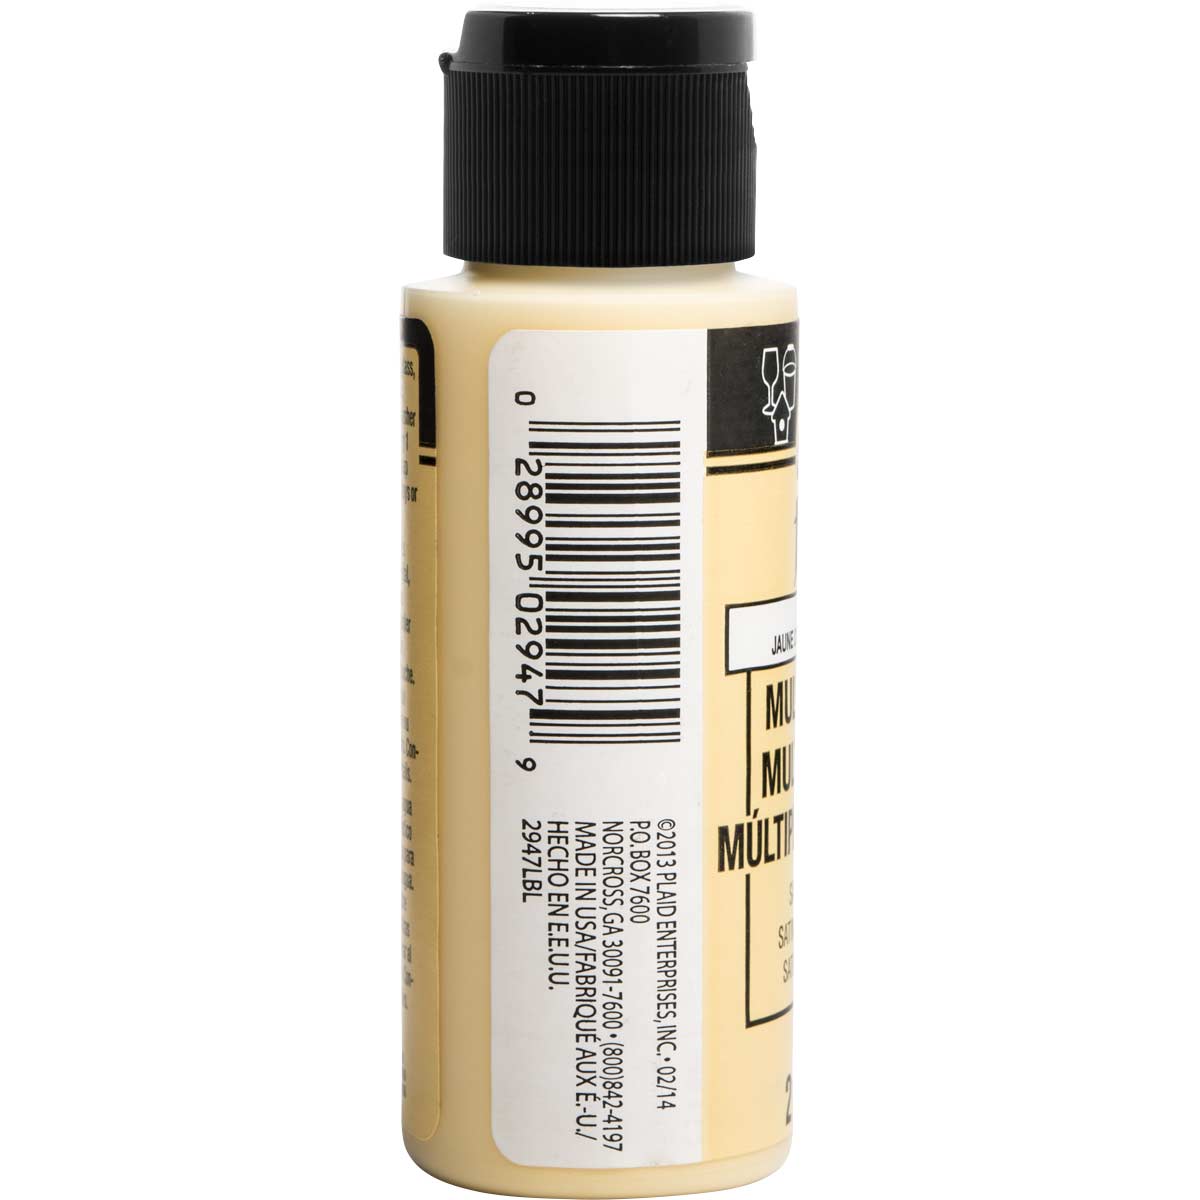 FolkArt ® Multi-Surface Satin Acrylic Paints - Pale Yellow, 2 oz. - 2946